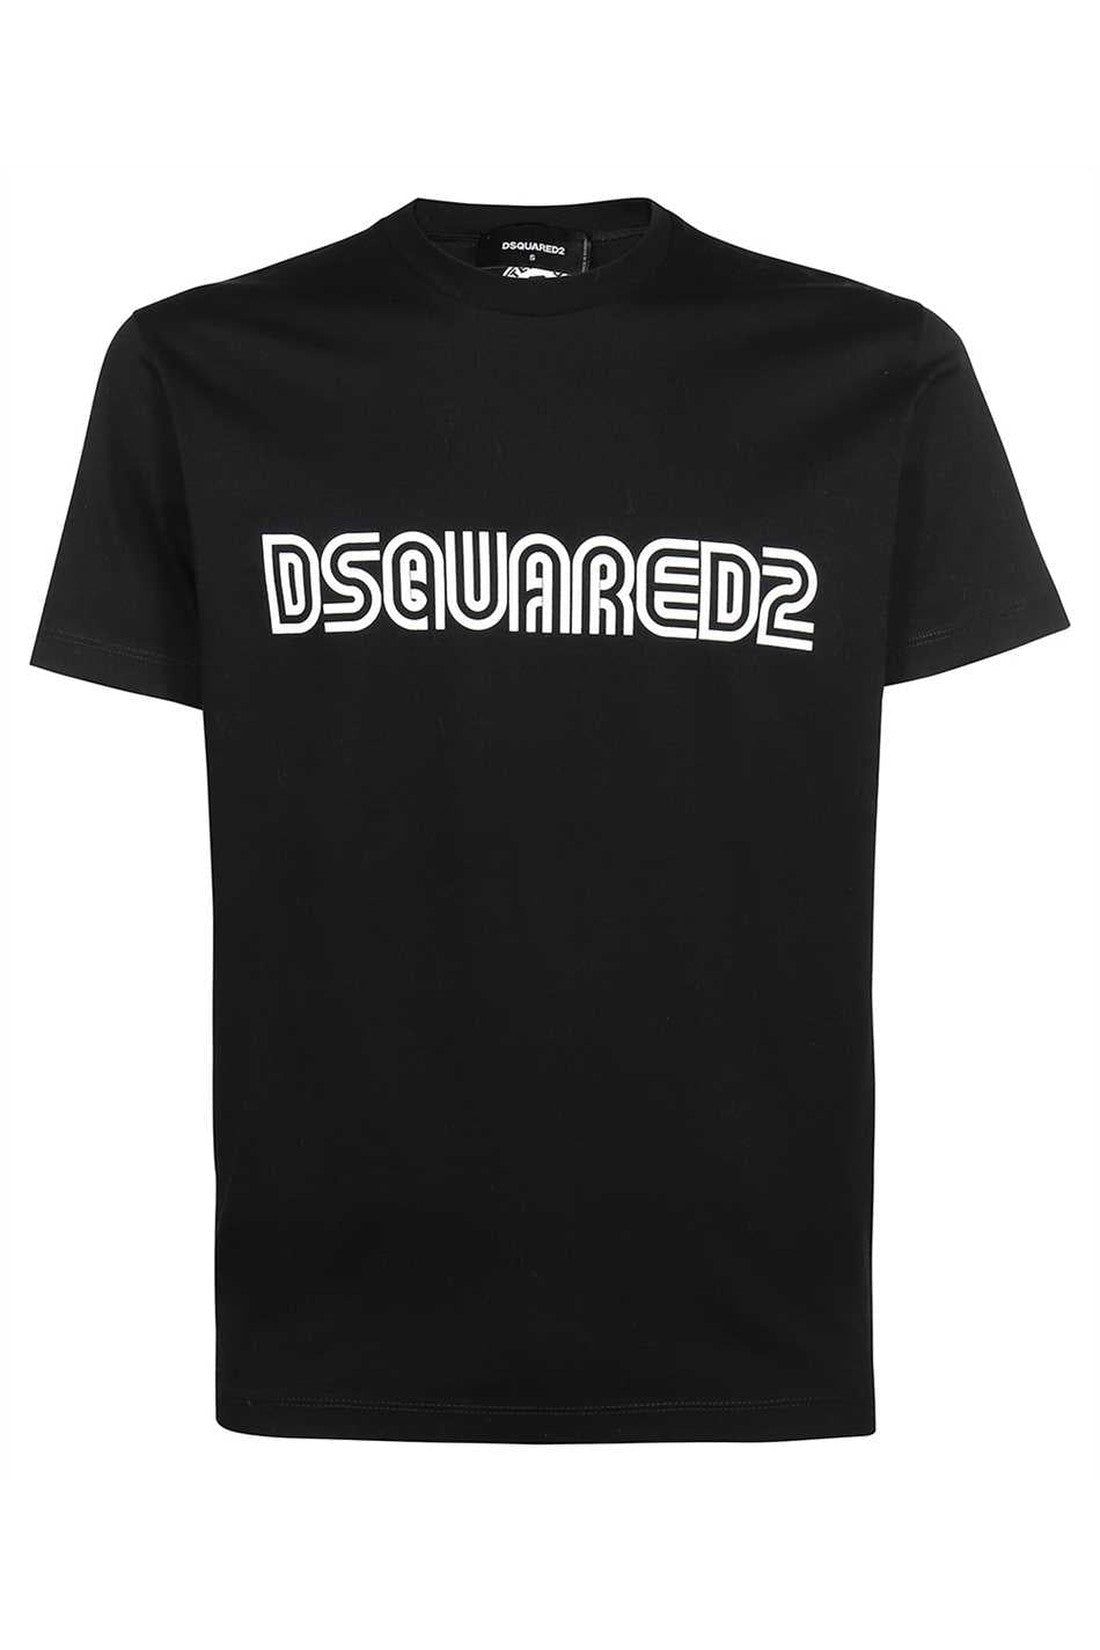 Dsquared2-OUTLET-SALE-Crew-neck-t-shirt-Shirts-L-ARCHIVE-COLLECTION.jpg